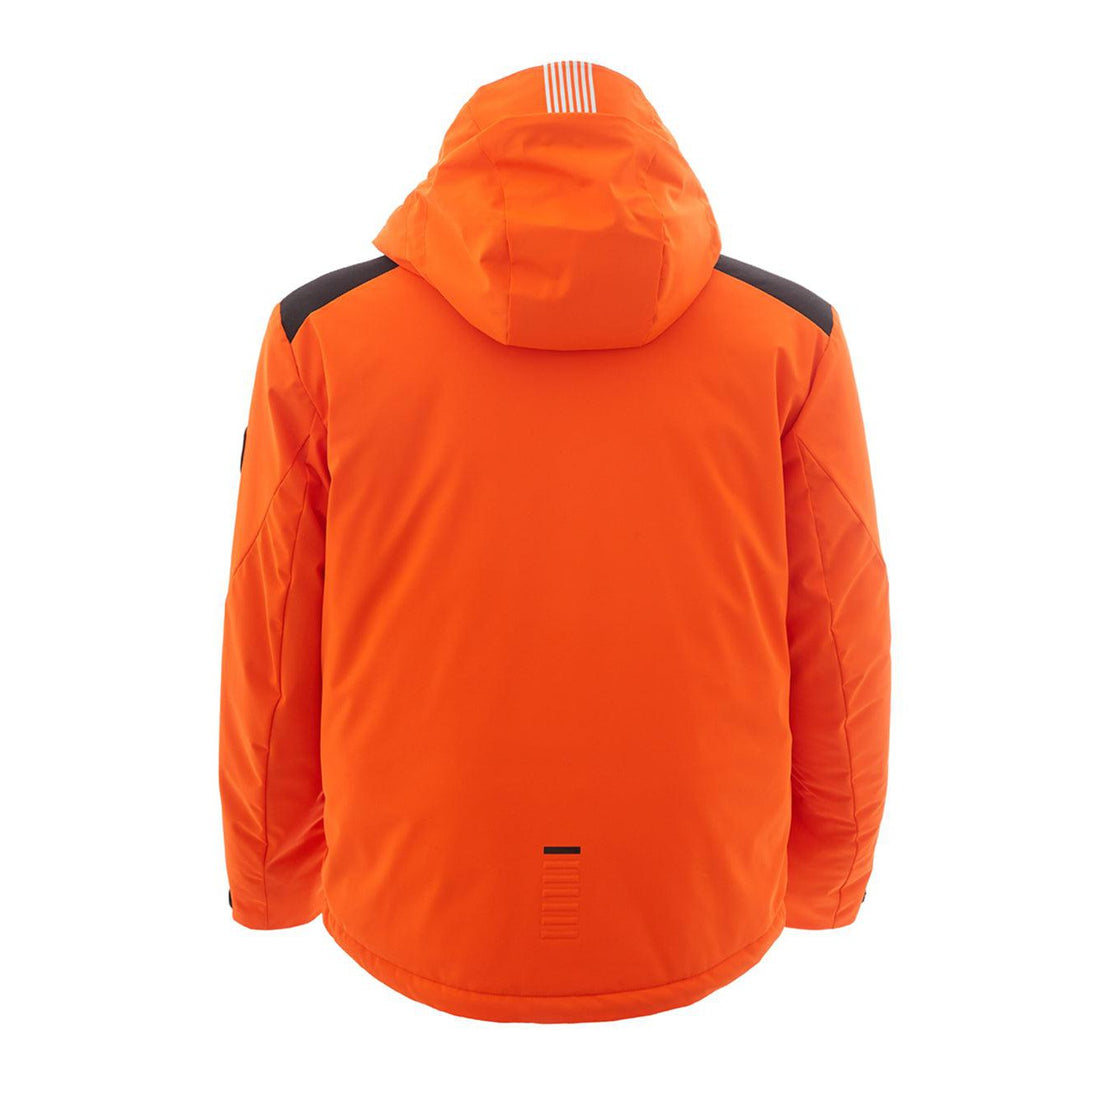 EA7 Emporio Armani Orange Winter Jacket with Removable Sleeveless vest